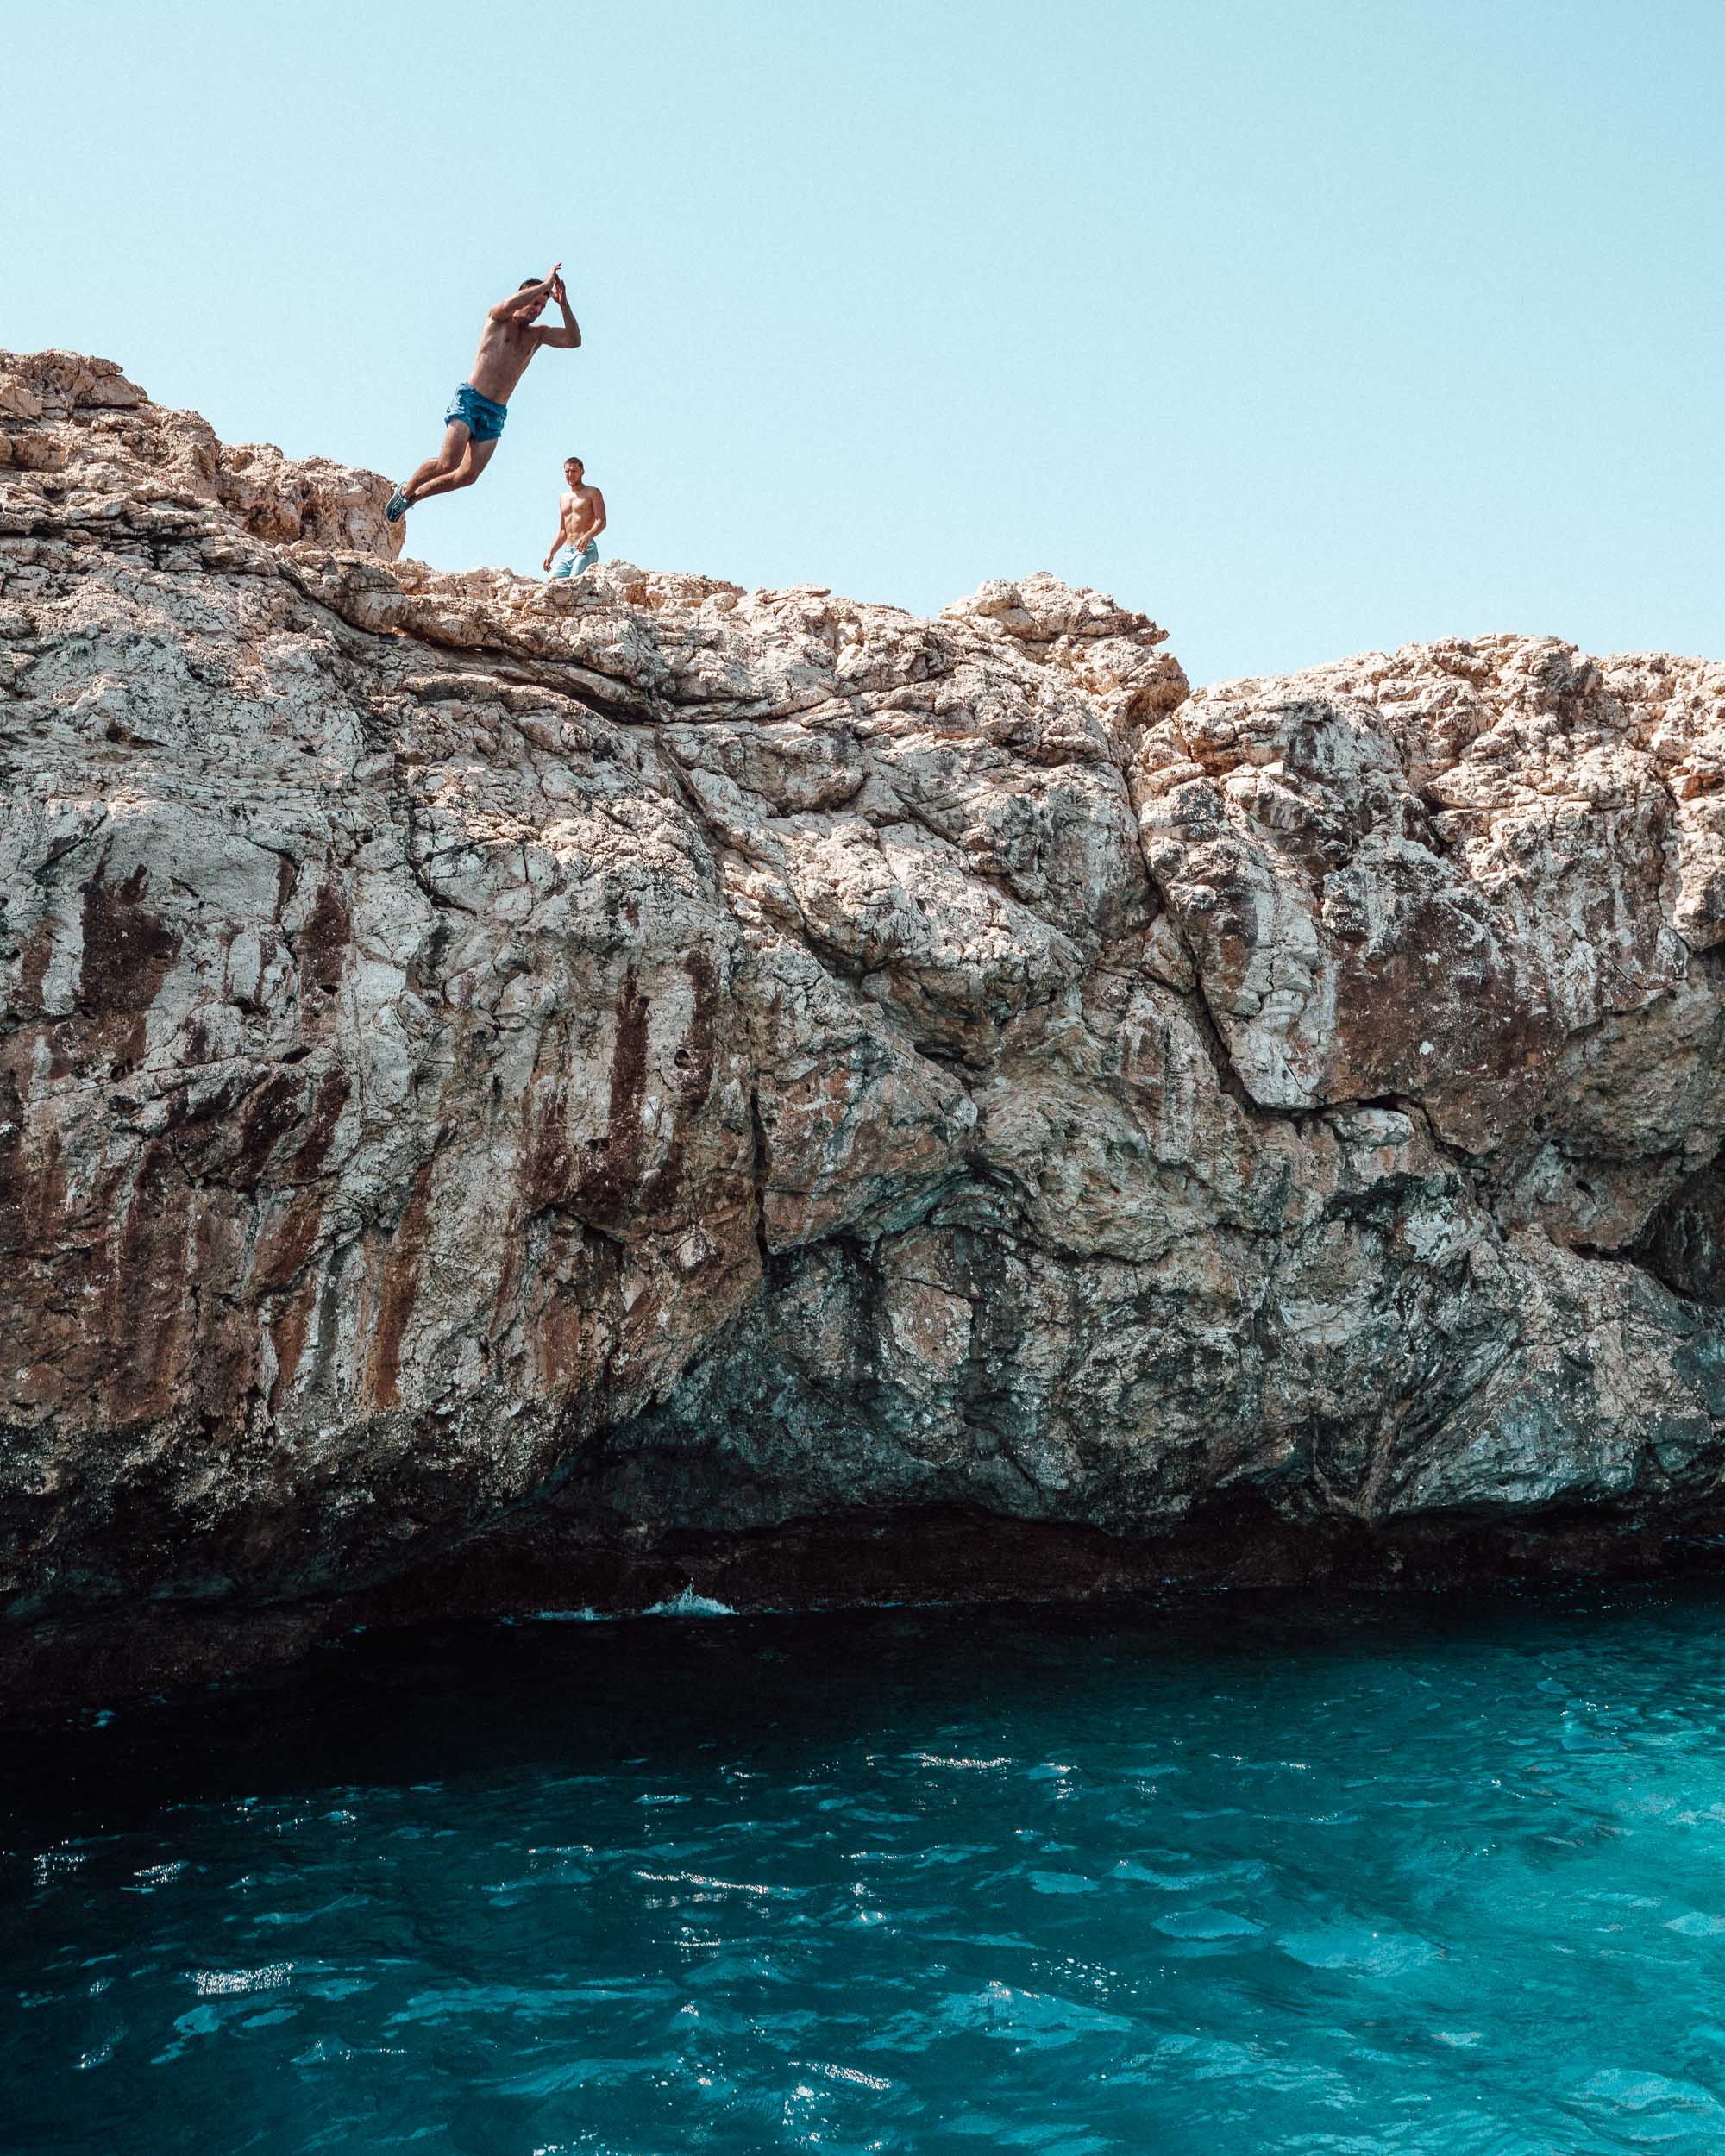 Cliff jumping in ayia napa Cyprus via @finduslost